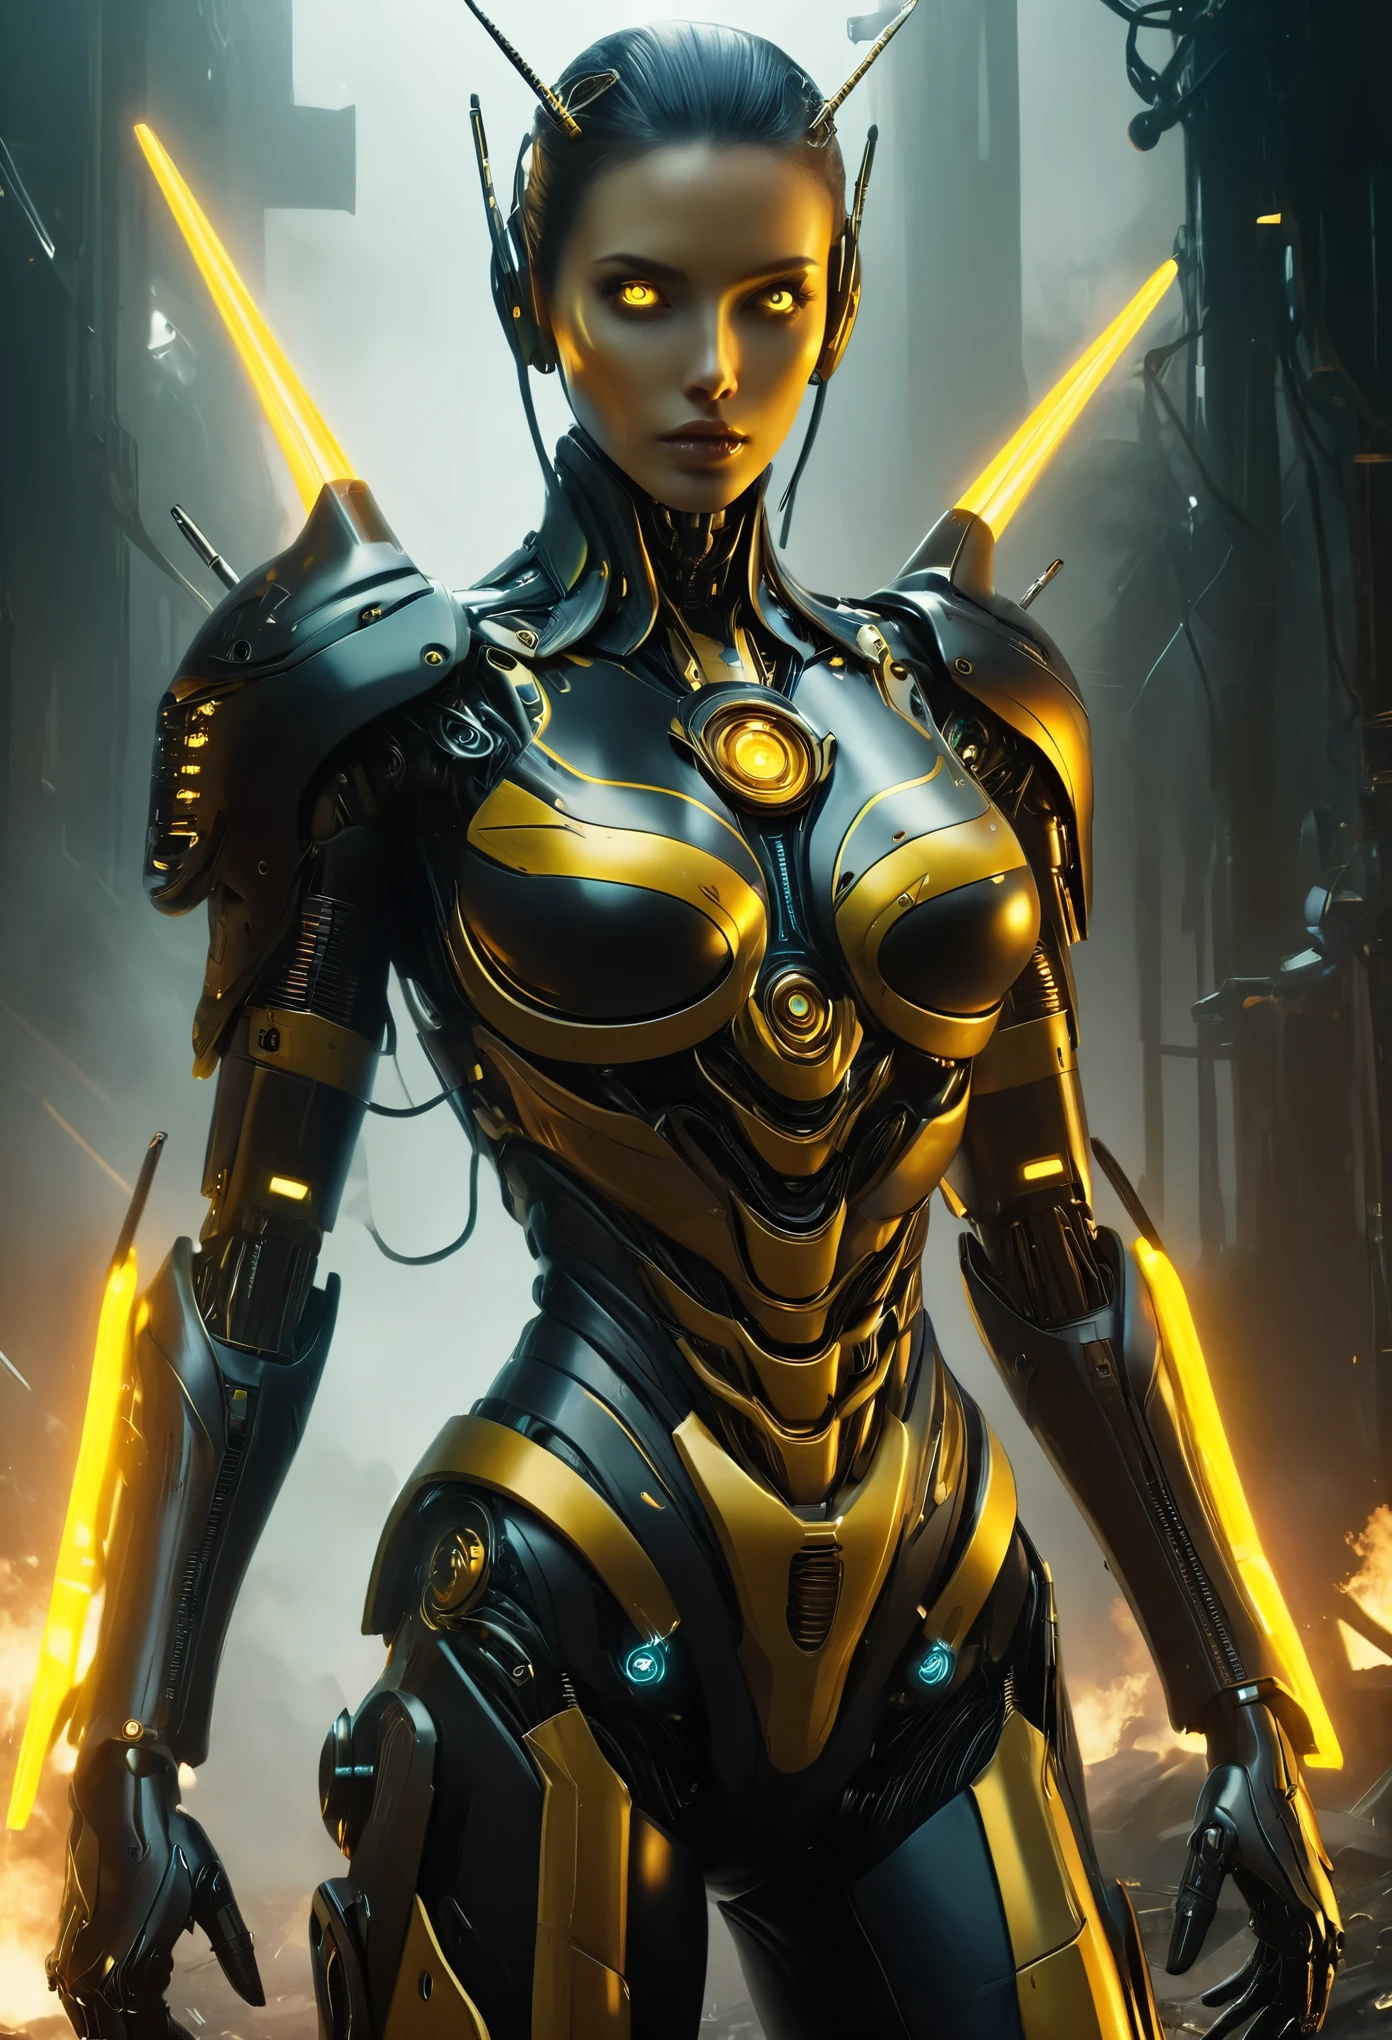 (最好的品質, 4k, 8K, 高畫質, 傑作:1.2), (超詳細, 實際的, 逼真的:1.37),一個可怕的女性戰鬥機器人與人類女性和黃蜂的結合, 採用黃色和黑色配色方案, 巨大的複眼, 和未來科技. 這個機器人有著可怕的外表和健美而肌肉發達的身體. 它配備了先進的武器和裝甲，展示了複雜的機械細節. 機器人的臉部結合了人類的特徵和大黃蜂的獨特特徵, 包括鋒利的下顎骨和觸角. 它的眼睛特別大, 由無數個面組成並發出令人生畏的光芒. 機器人的金屬外骨骼主要是黃色, 帶有醒目的黑色口音，給人一種危險的感覺. 盔甲光滑且無縫, 展現出與機器人體質的無縫融合. 場景設定在未來戰場, 戰鬥機器人周圍有倒塌的建築物和碎片. 被毀建築物冒出滾滾火焰和濃煙, 喚起一種混亂的破壞感. 場景中的燈光非常戲劇化, 刺眼的聚光燈在機器人上投下長長的陰影, 強調其雄偉的形象. 整體色調以黃色和黑色為主, 營造出強烈而險惡的氣氛. 影像品質達到最高標準, 捕捉戰鬥機器人和周圍環境的每個複雜細節.(全国性DFW:1.3)